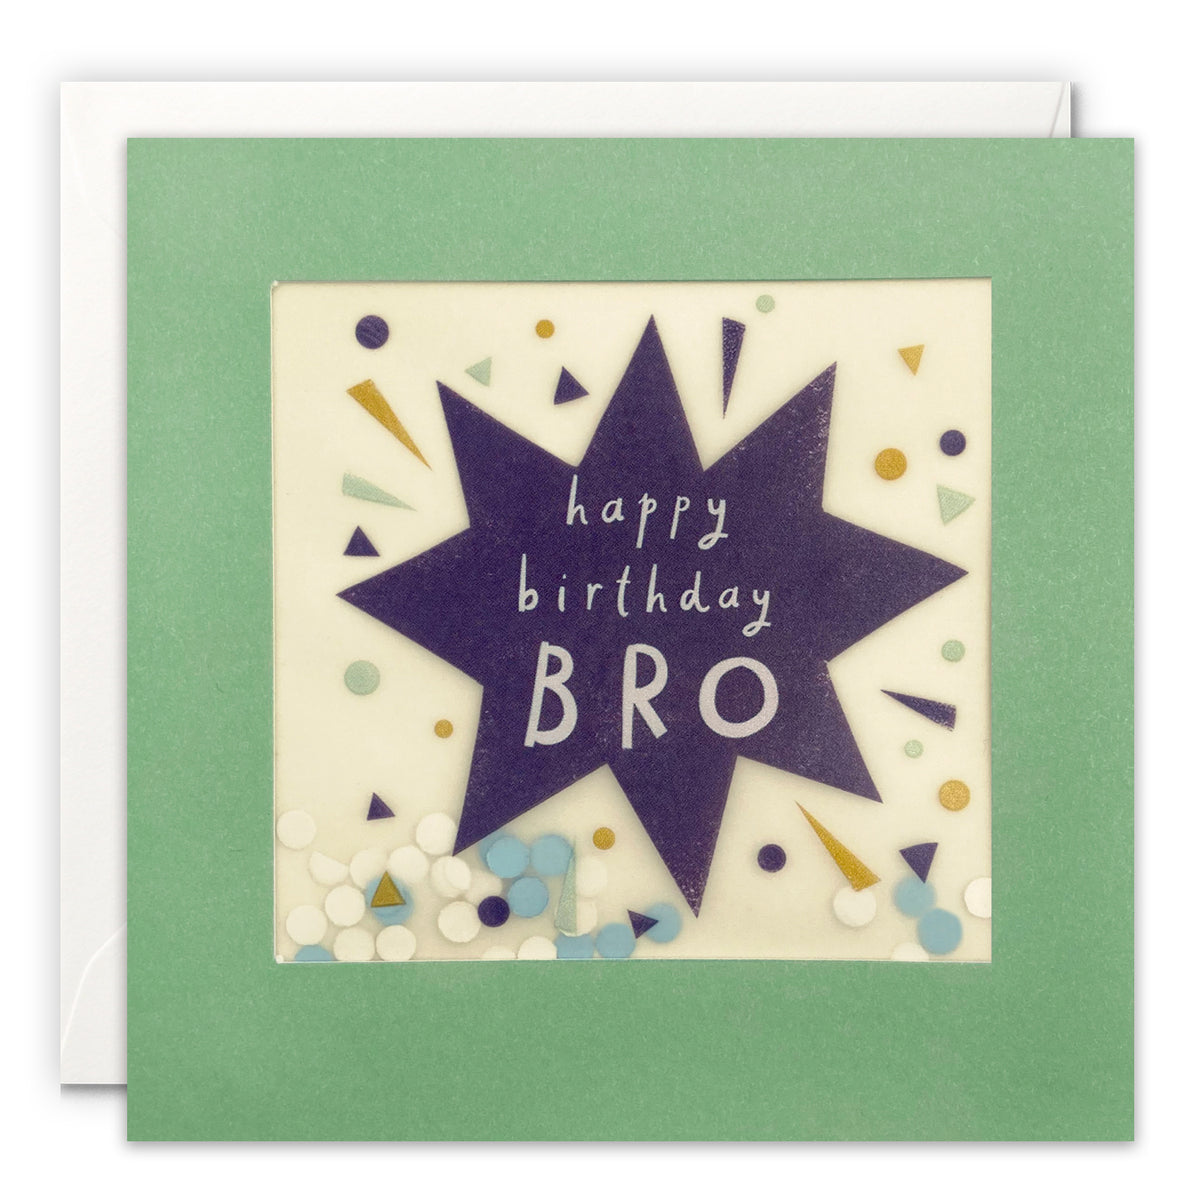 Bro Star Shakies Birthday Card from Penny Black